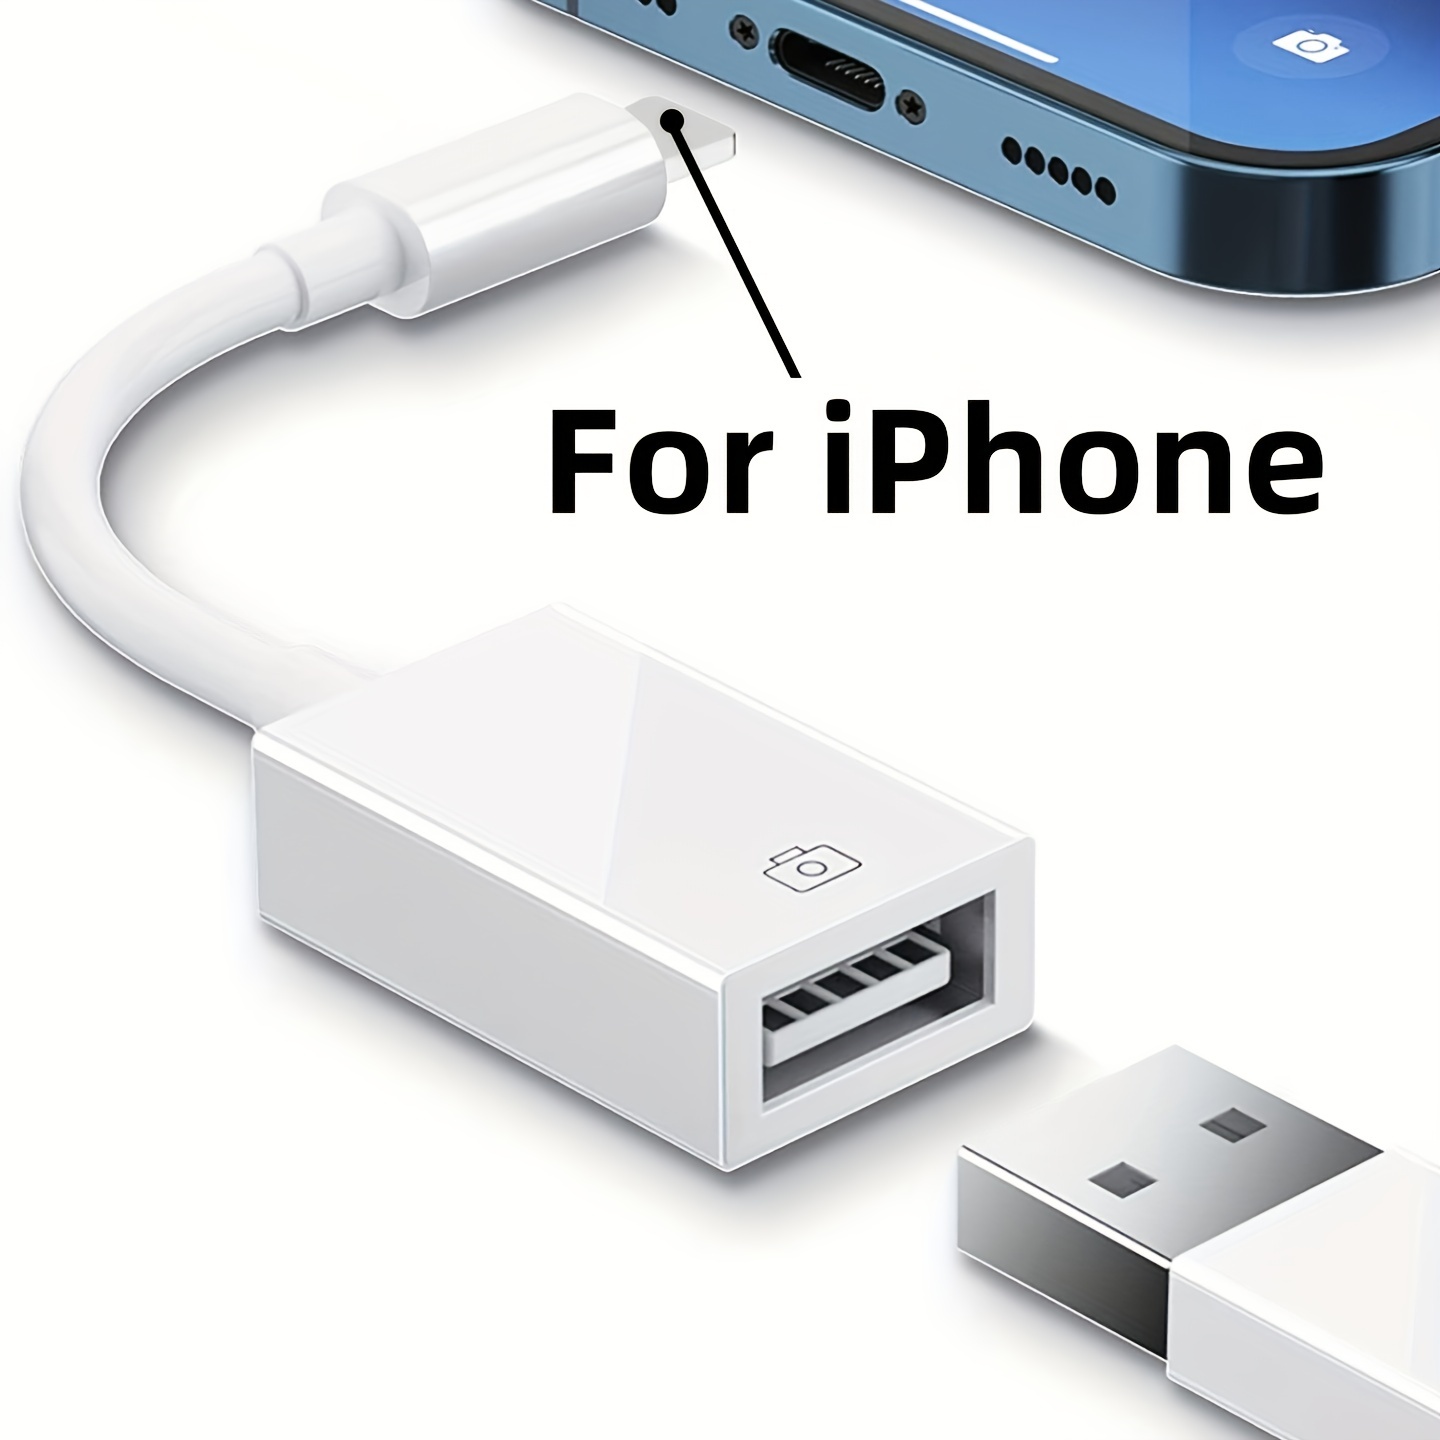 Adaptateur Appareil Photo Lightning vers USB 3.0 Compatible - Blanc